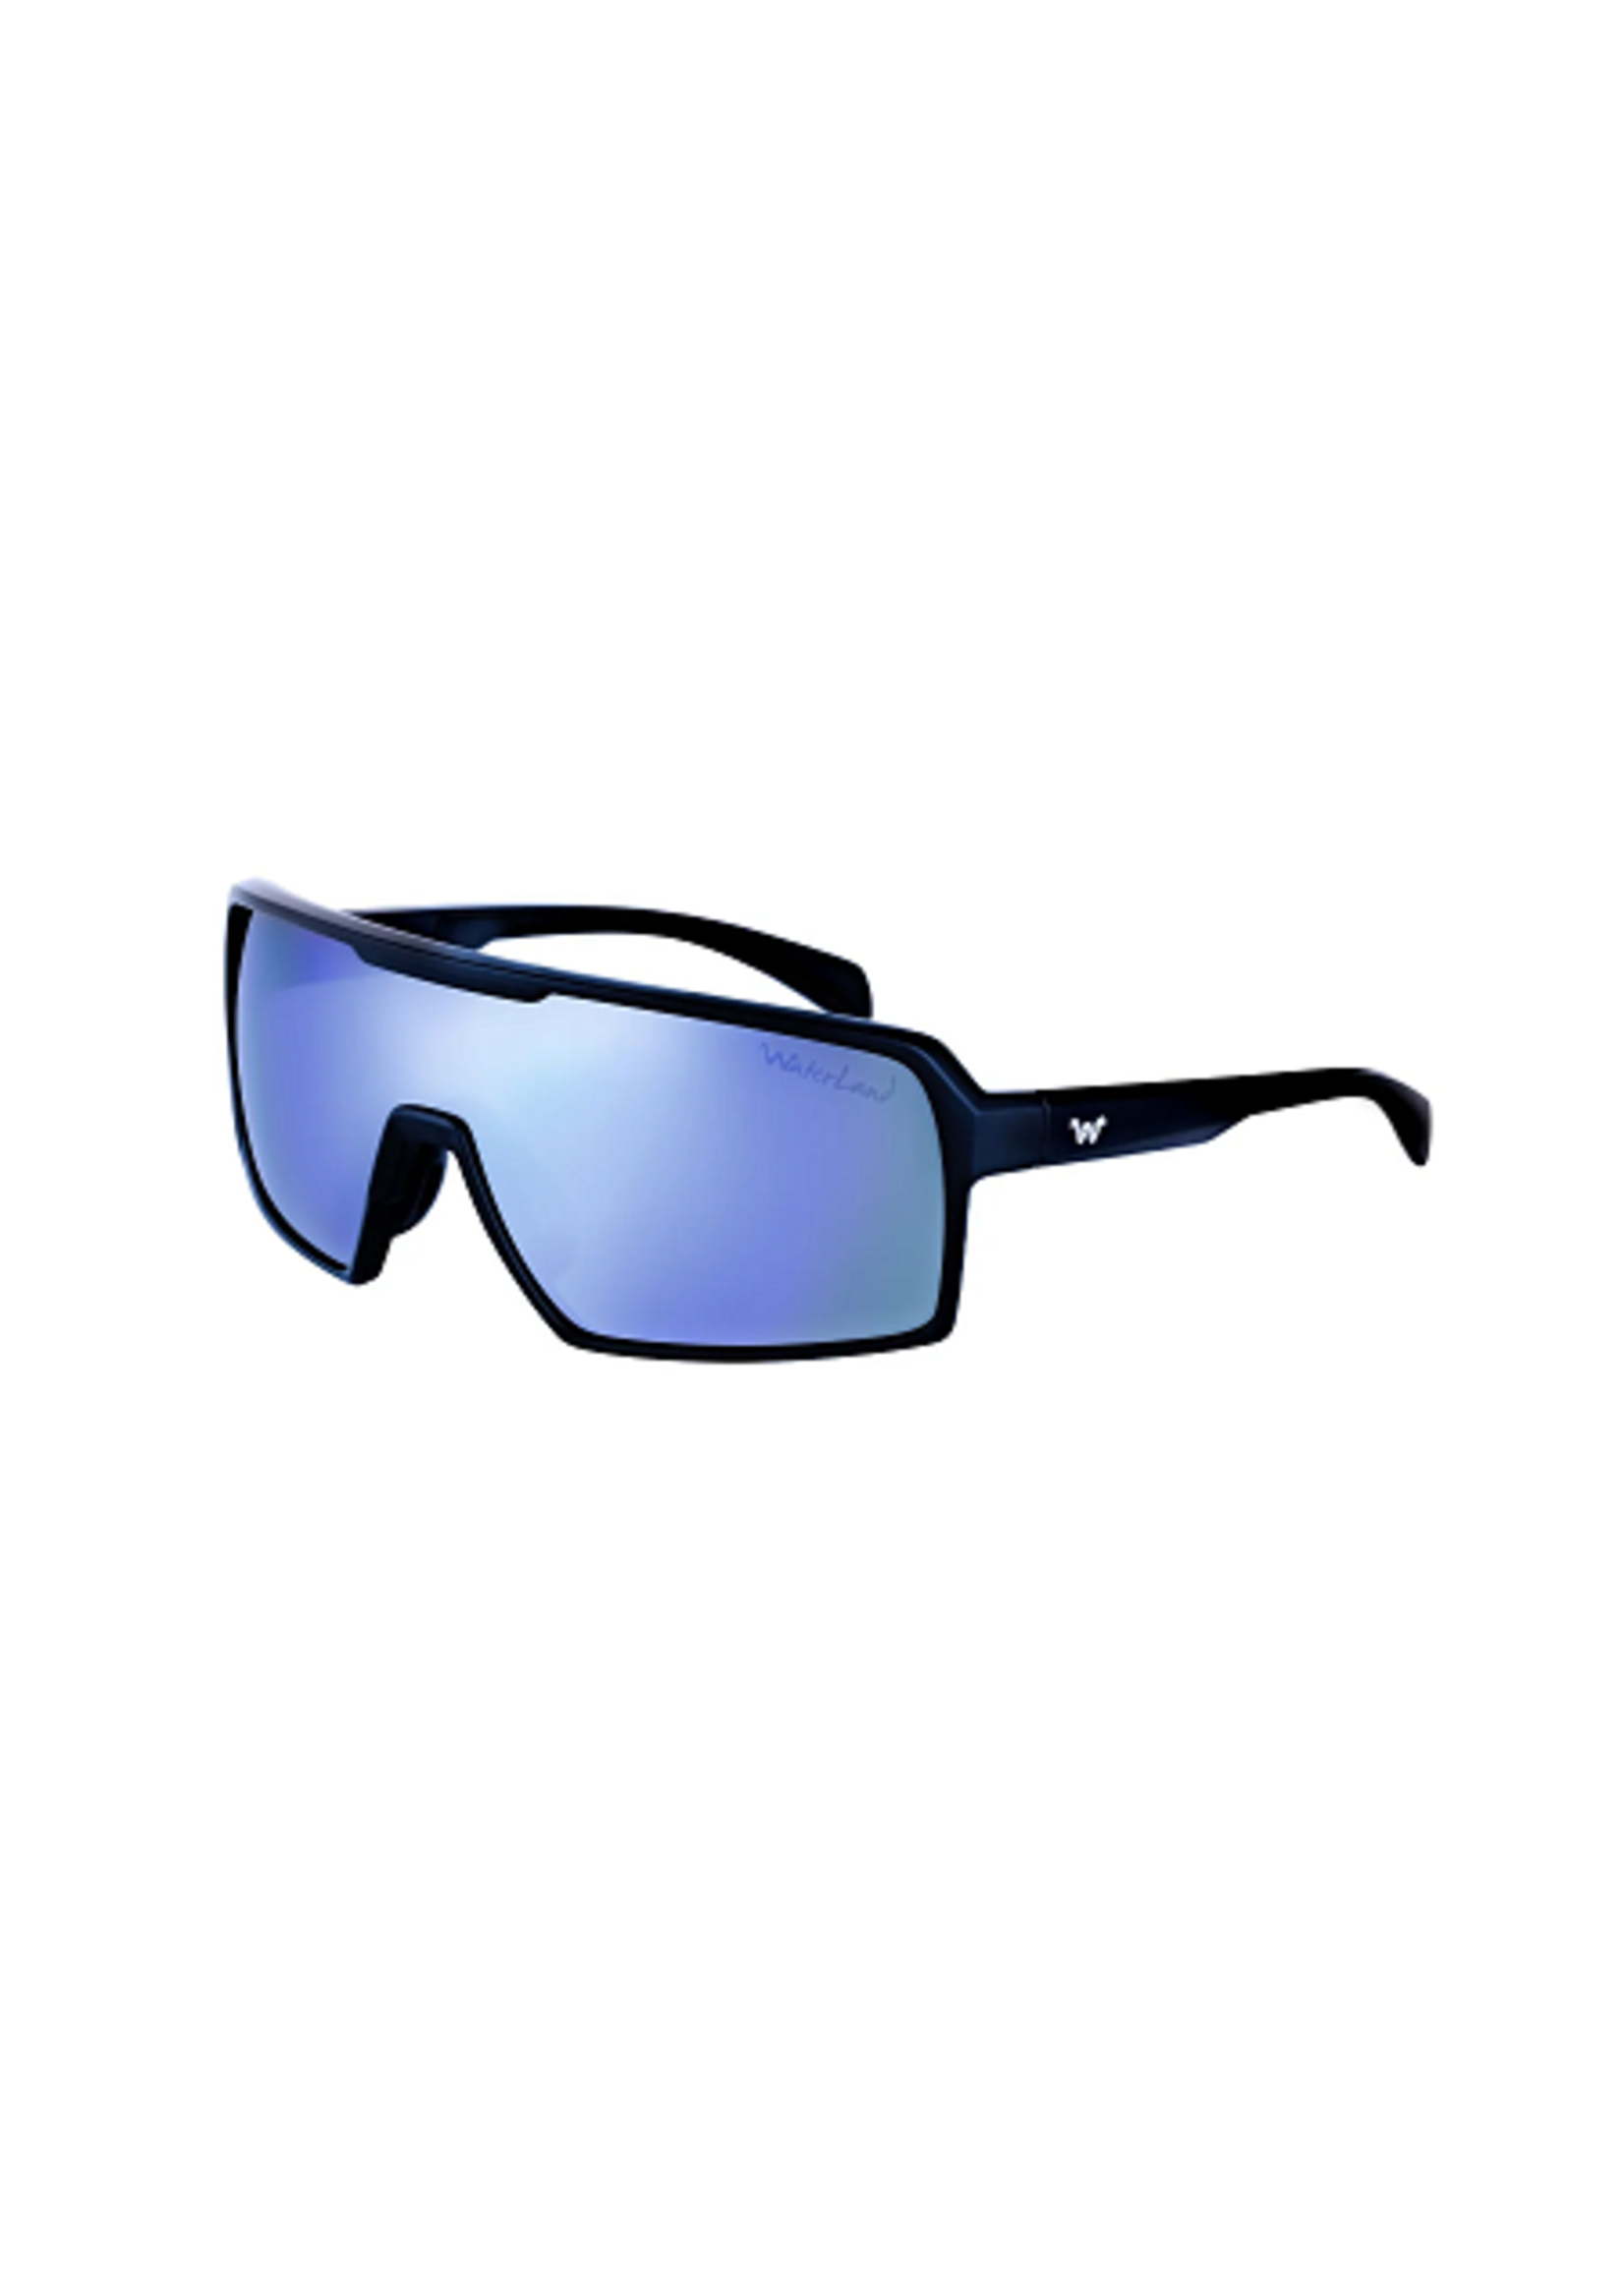 WaterLand Co, LLC. WaterLand Catchem Series Polarized Sunglasses